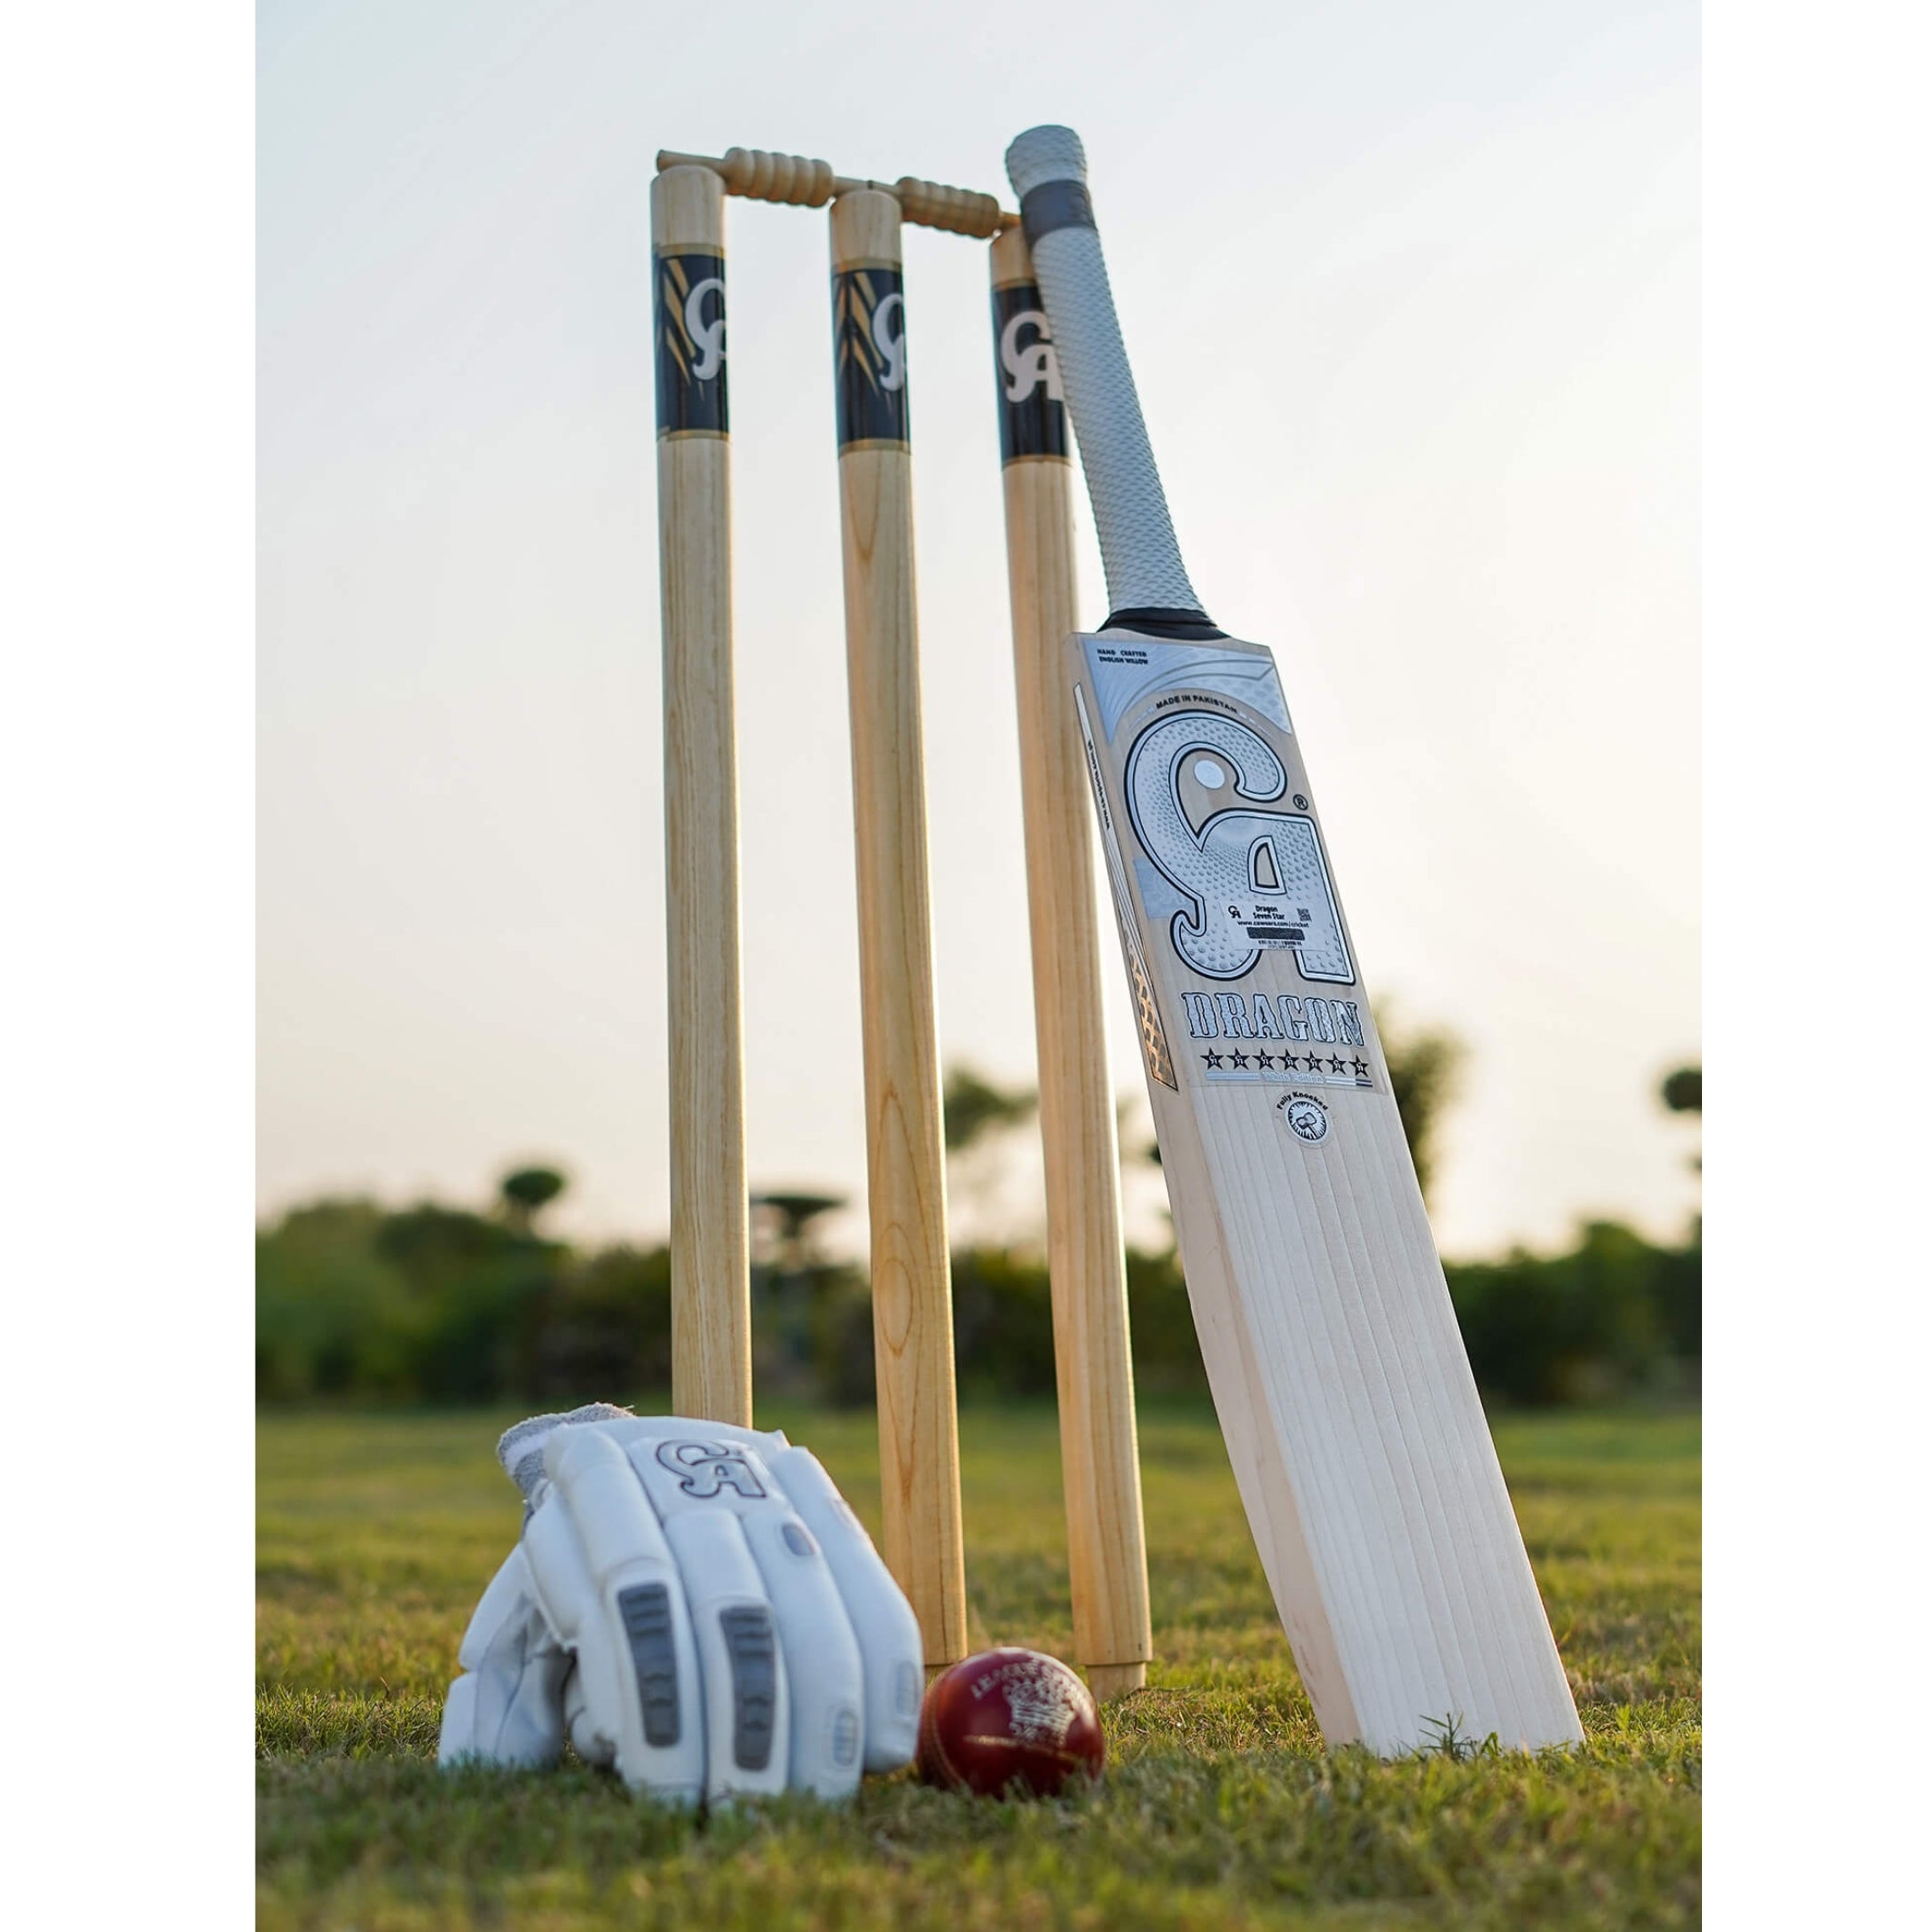 CA Cricket Bat, Model White Dragon 7-Star, English Willow